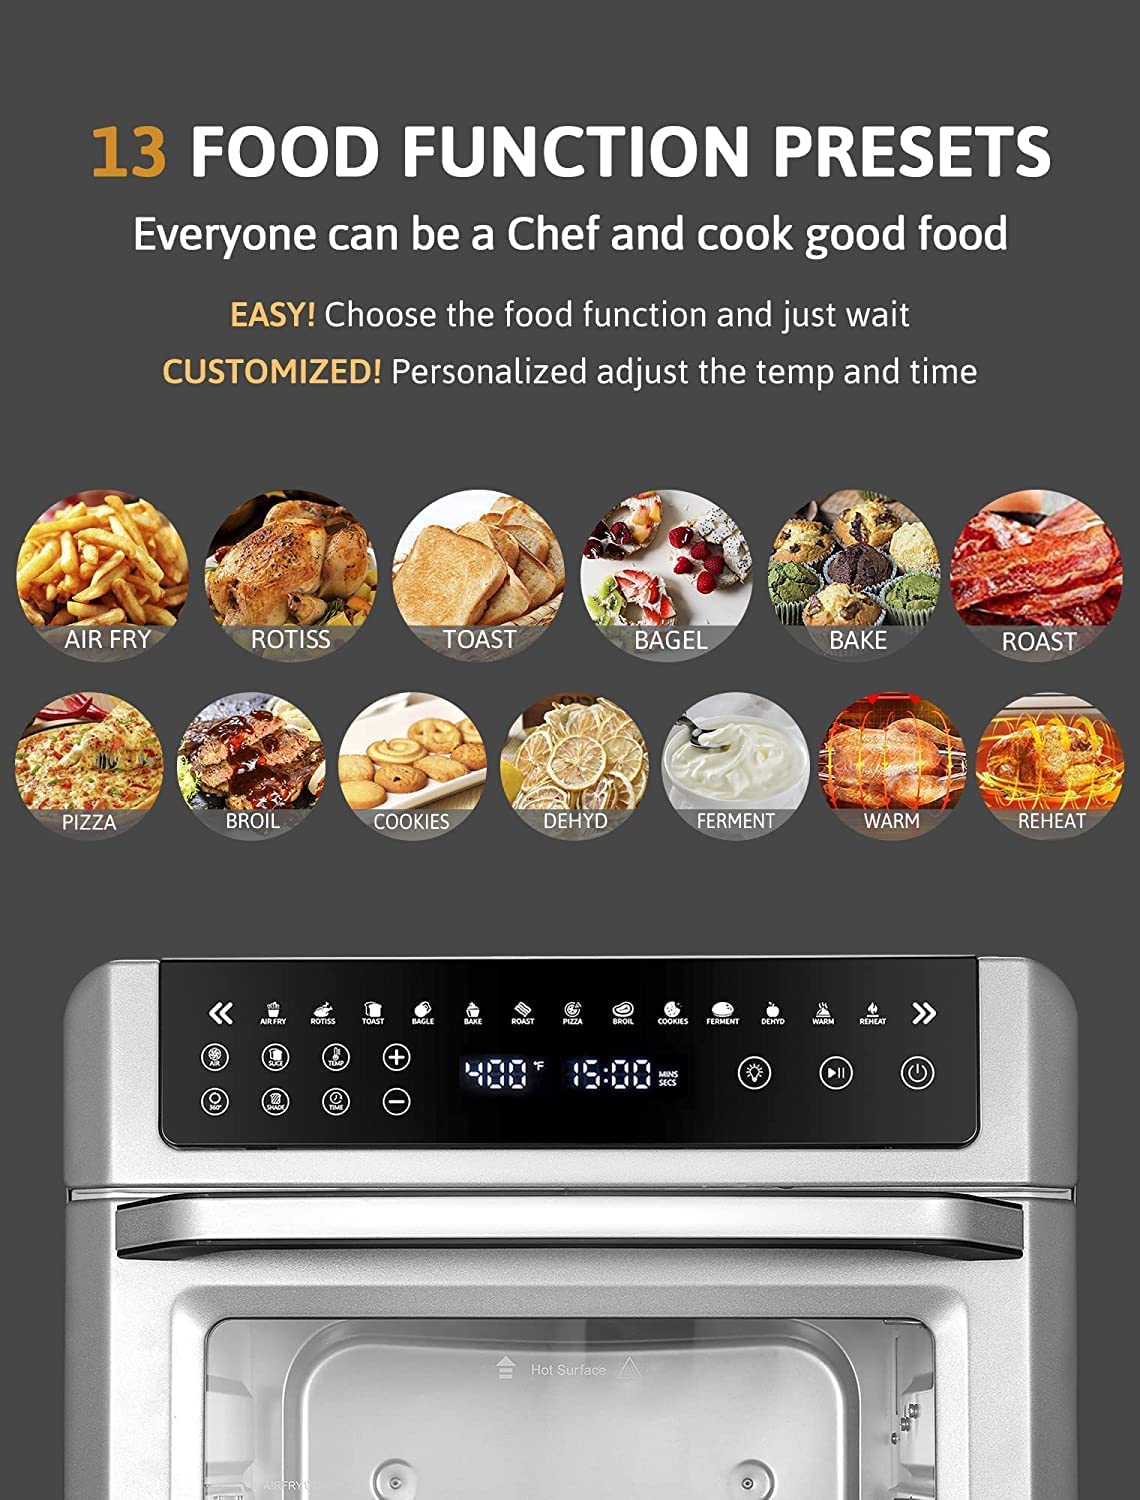 Gevi Air Fryer Toaster Oven Combo Large Digital LED Screen Convection –  Jbshomedecor